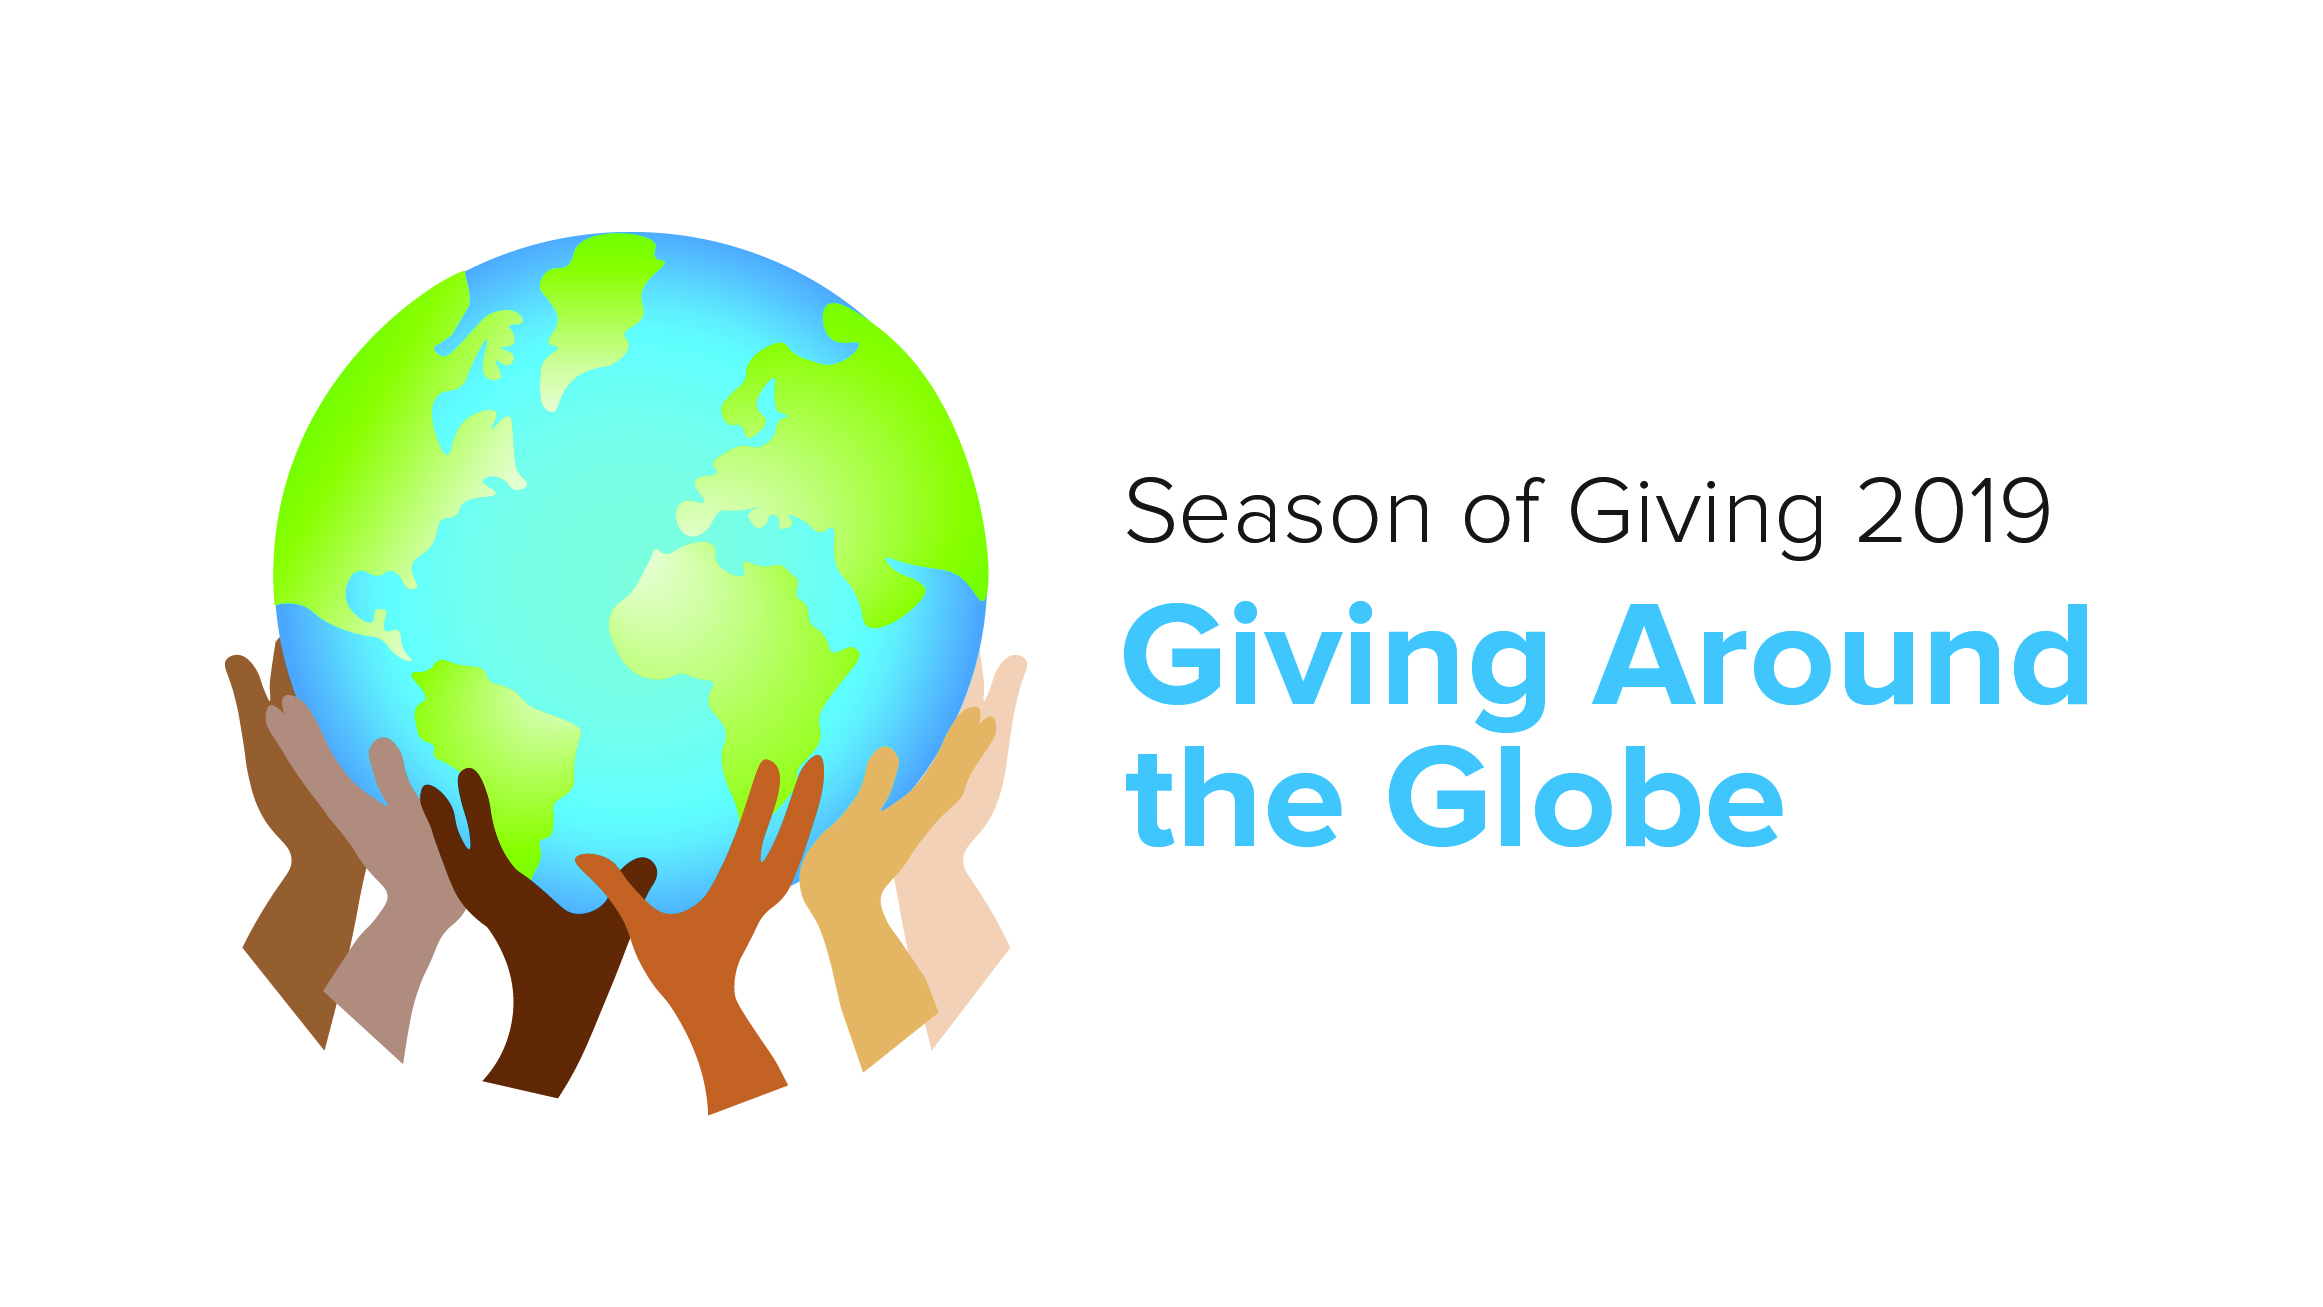 Zebra's Season of Giving 2019 campaign: Giving Around the Globe